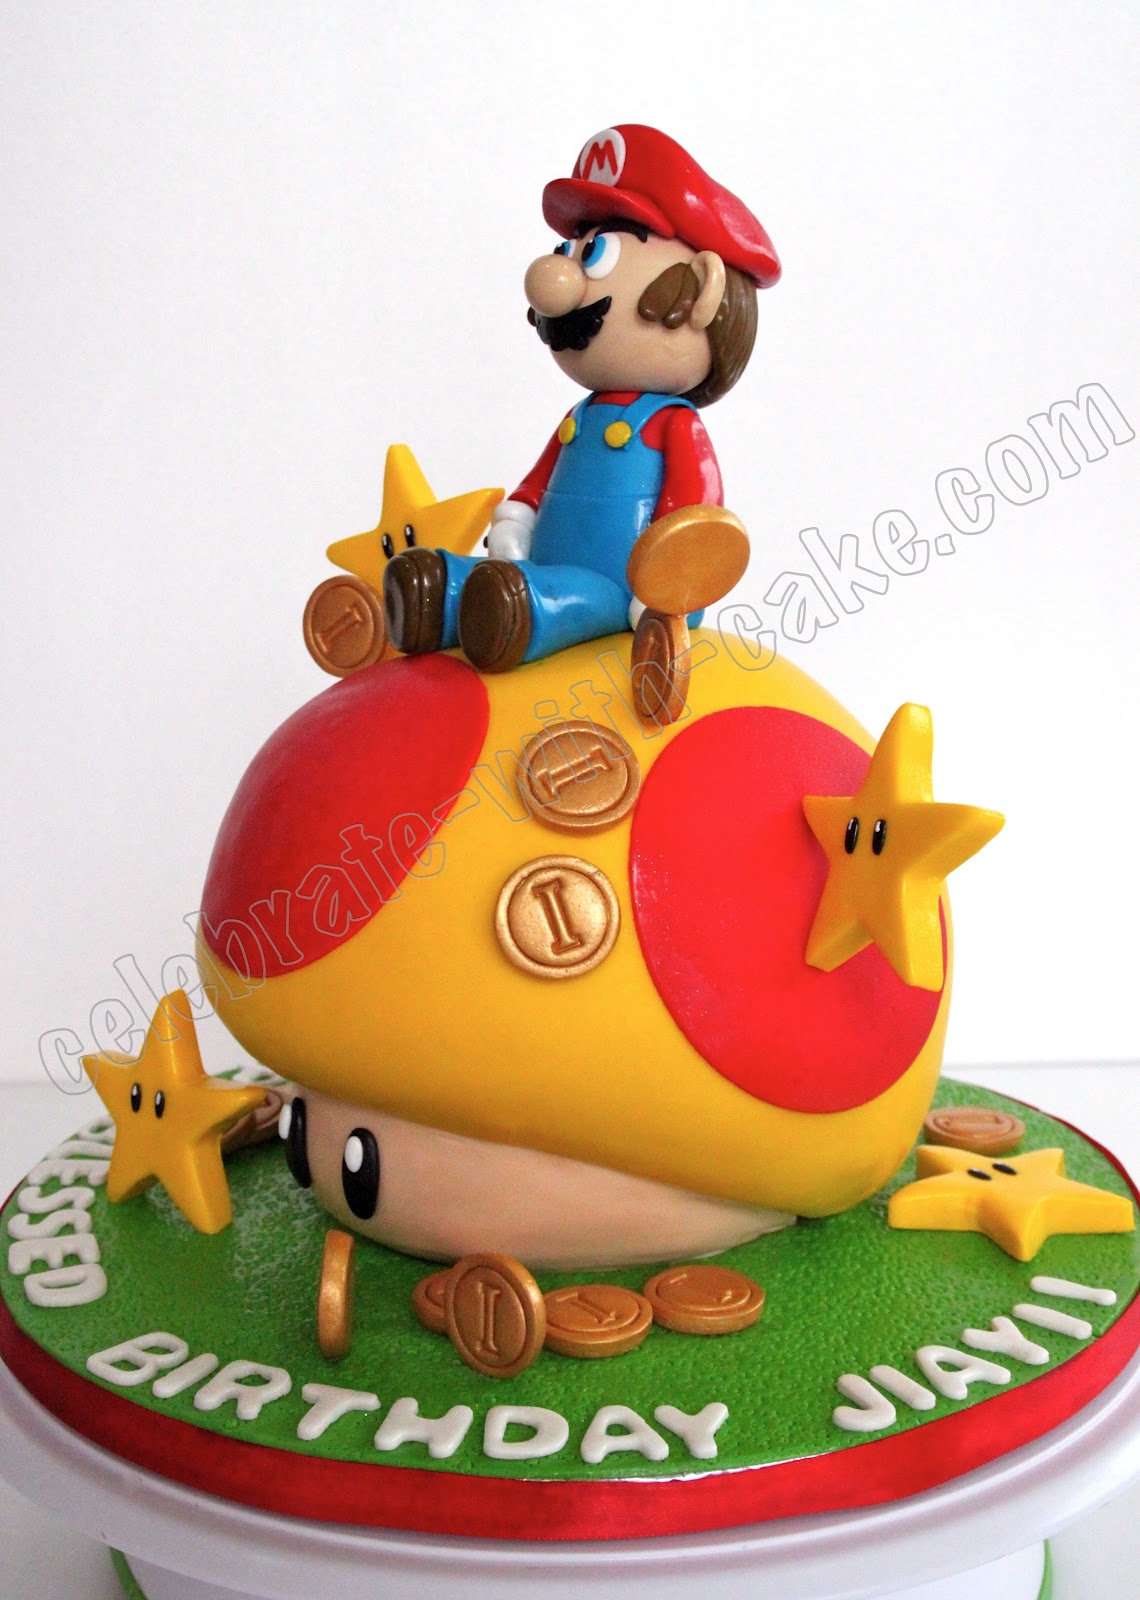 Celebrate with Cake!: Super Mario Cake